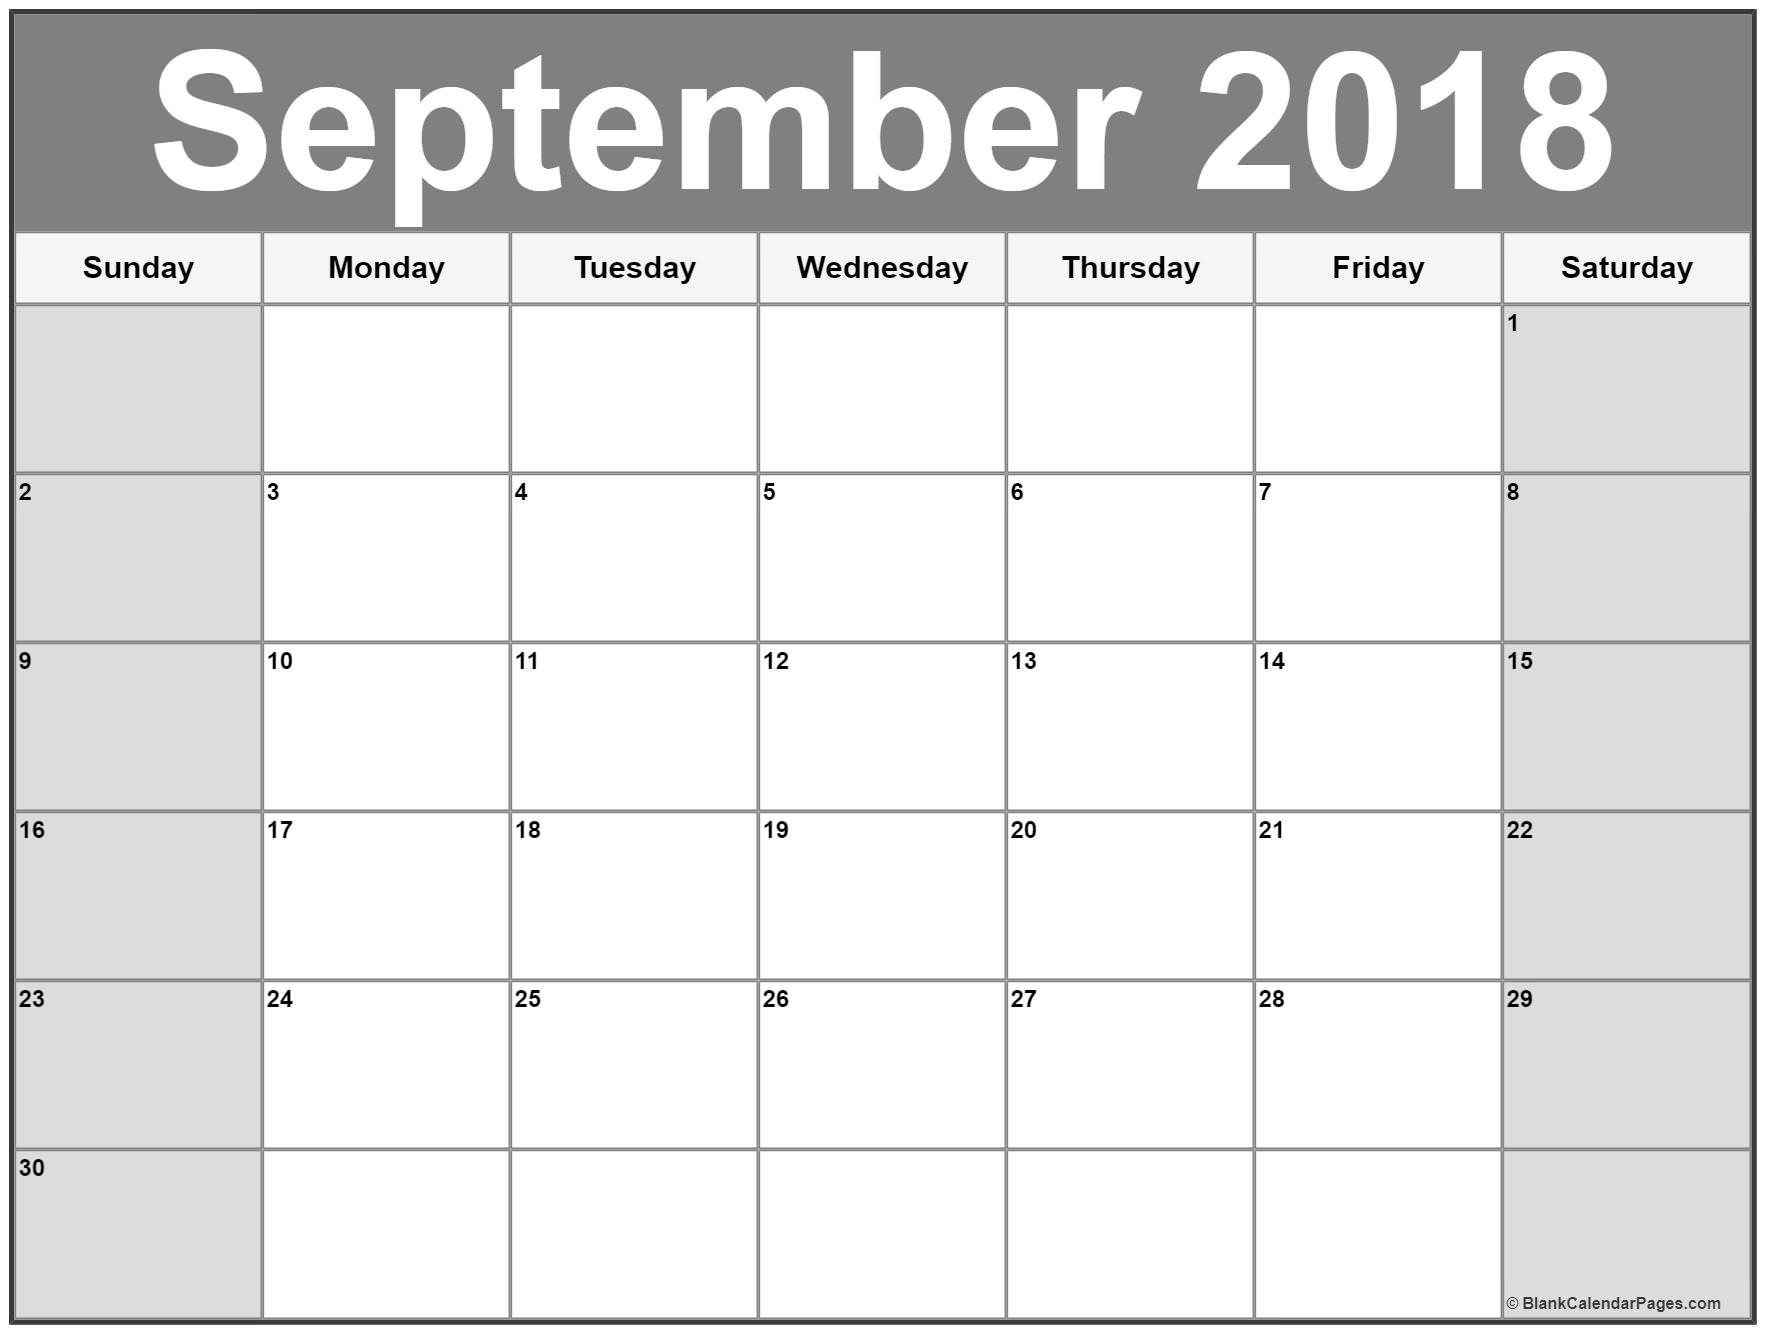 September 2018 calendar